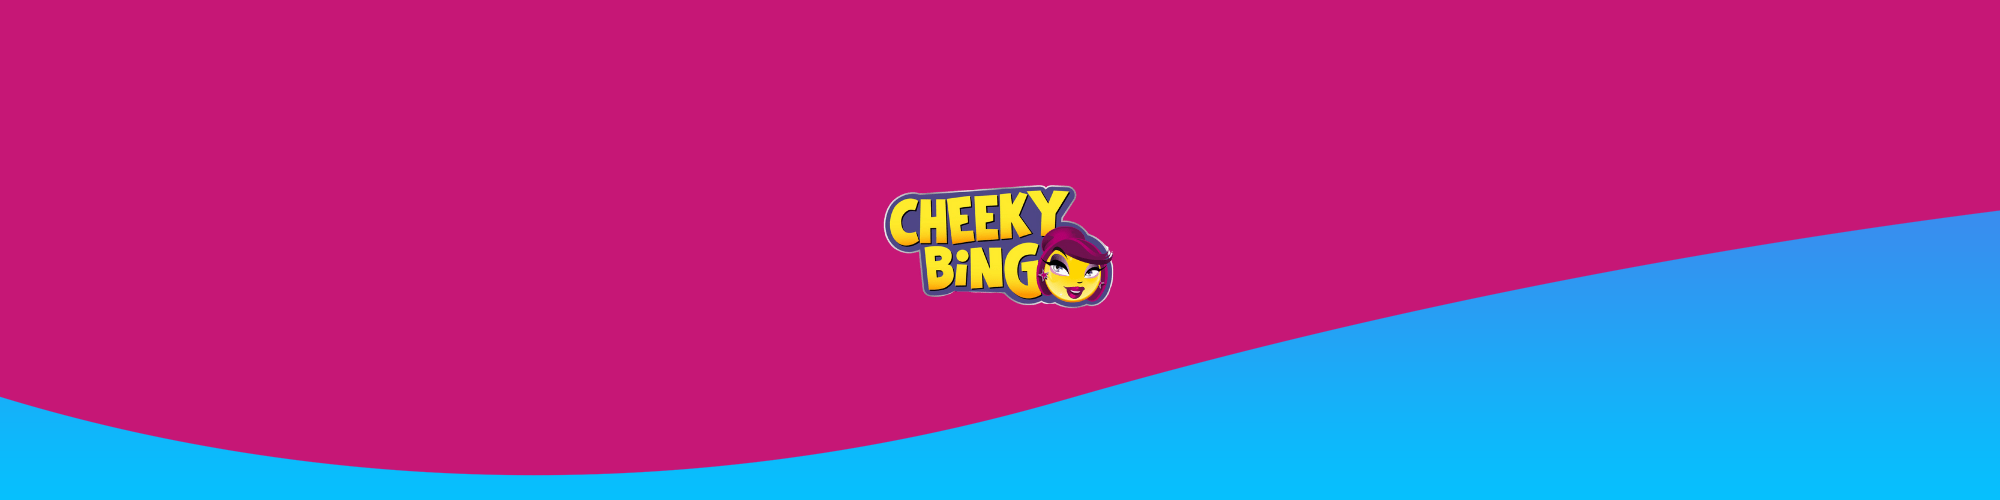 Cheeky Bingo Alternative on EazeGames